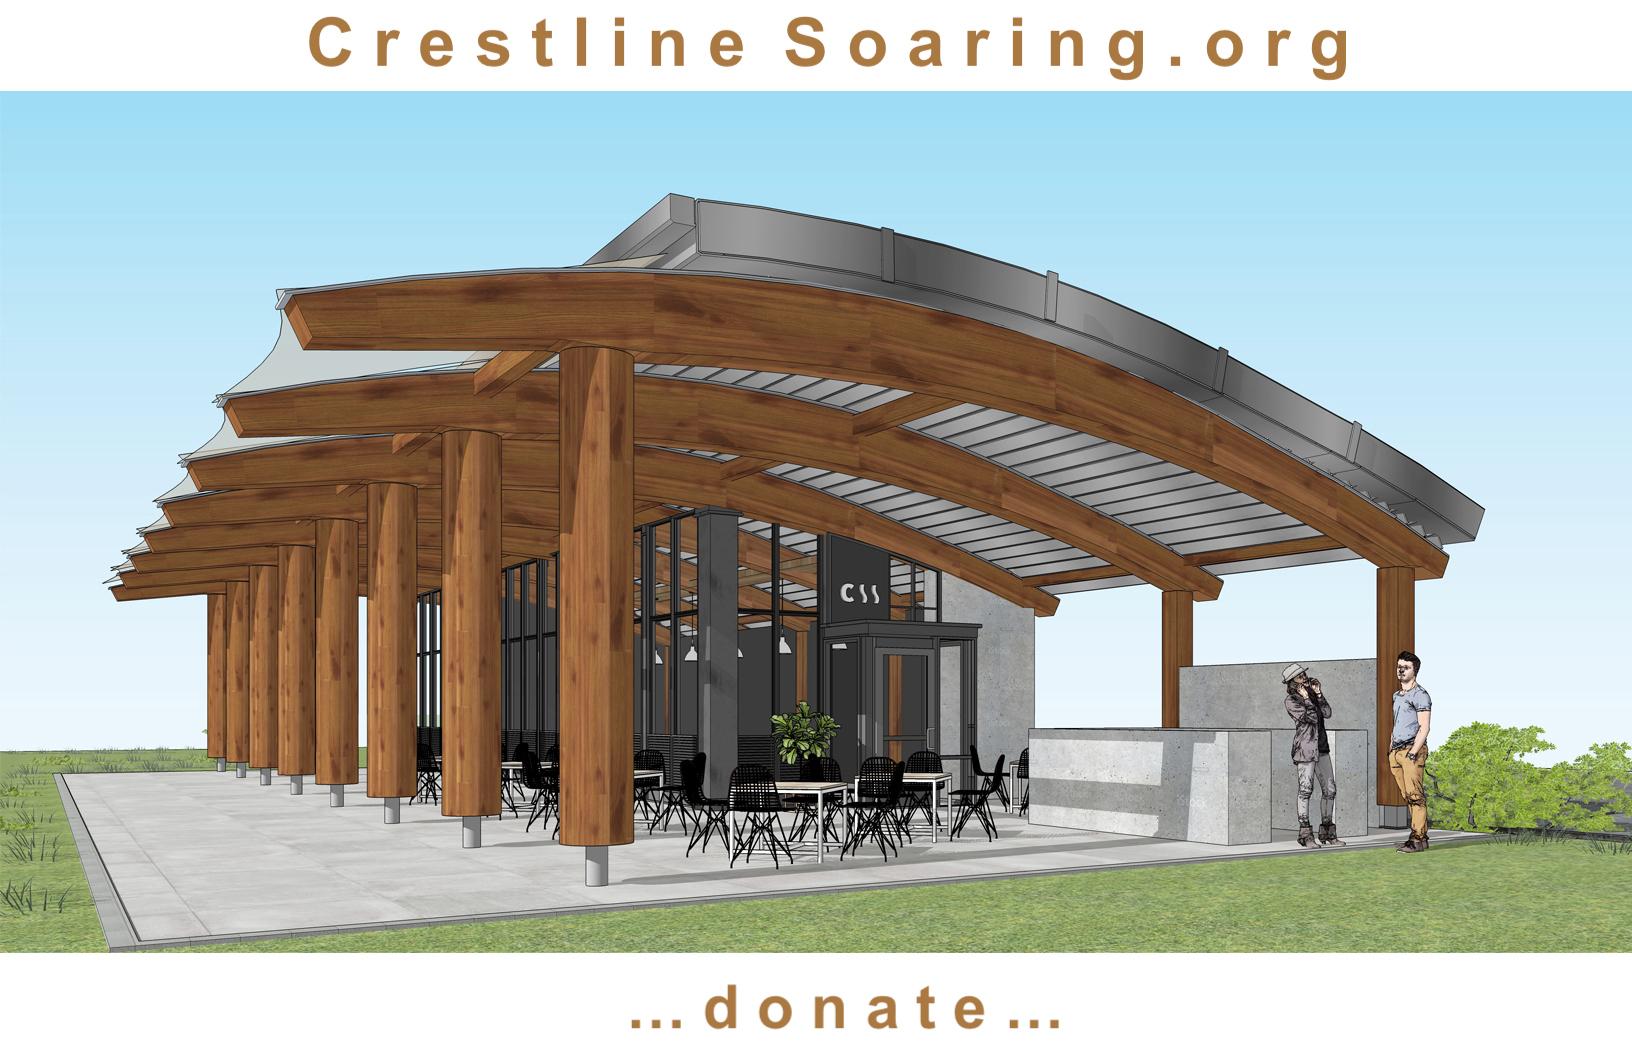 Crestline Soaring .org new structure donate